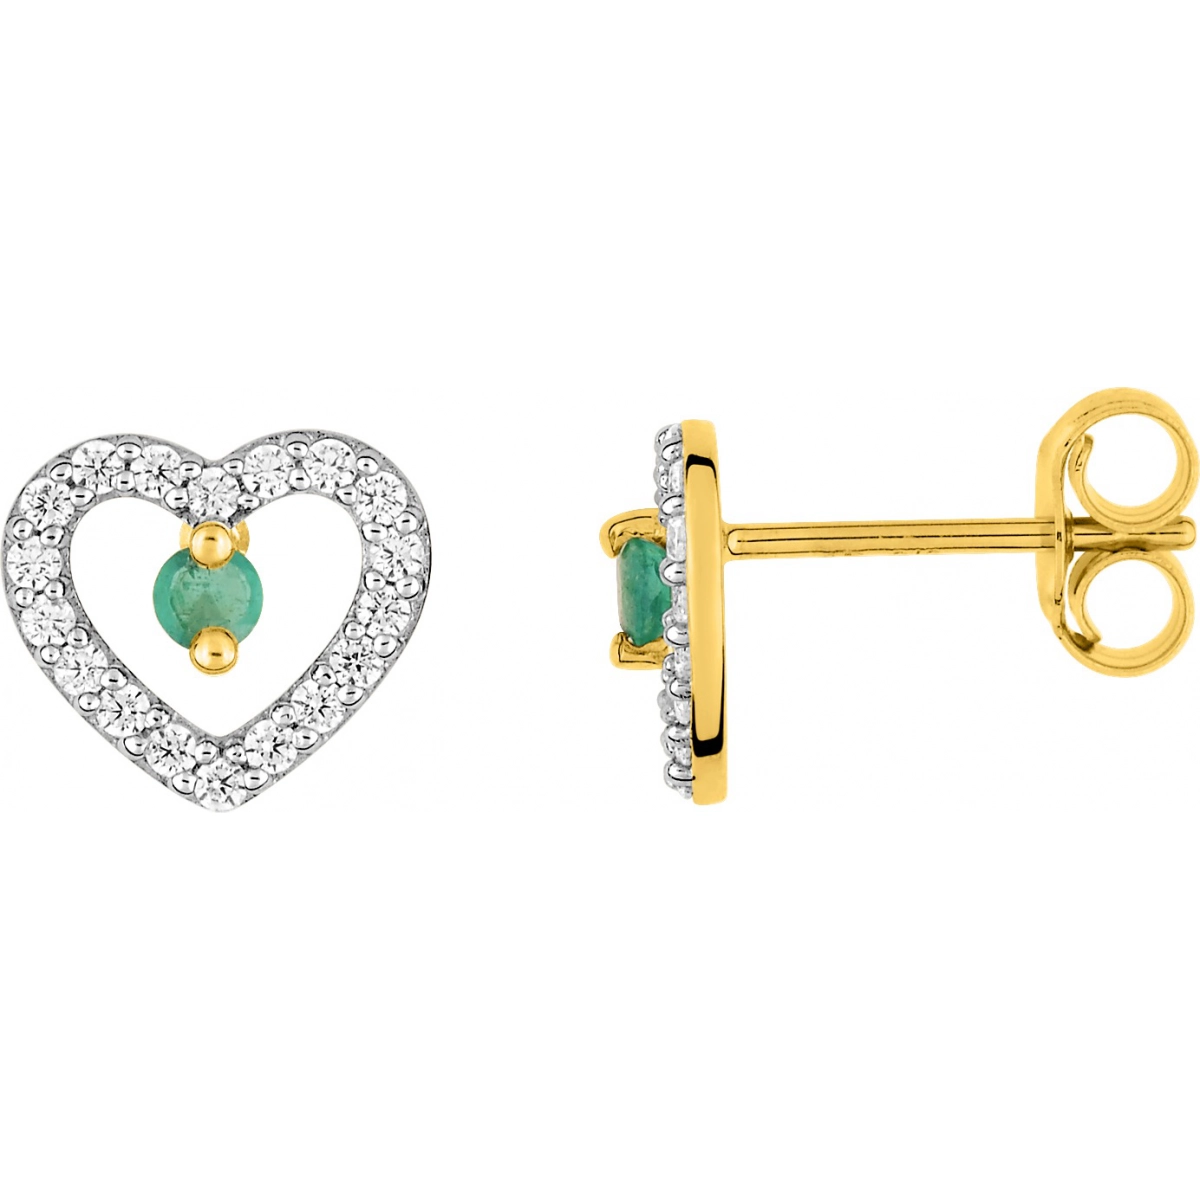 Earrings pair w. emerald and cz 9K 2TG  Lua Blanca  S12.22101.0